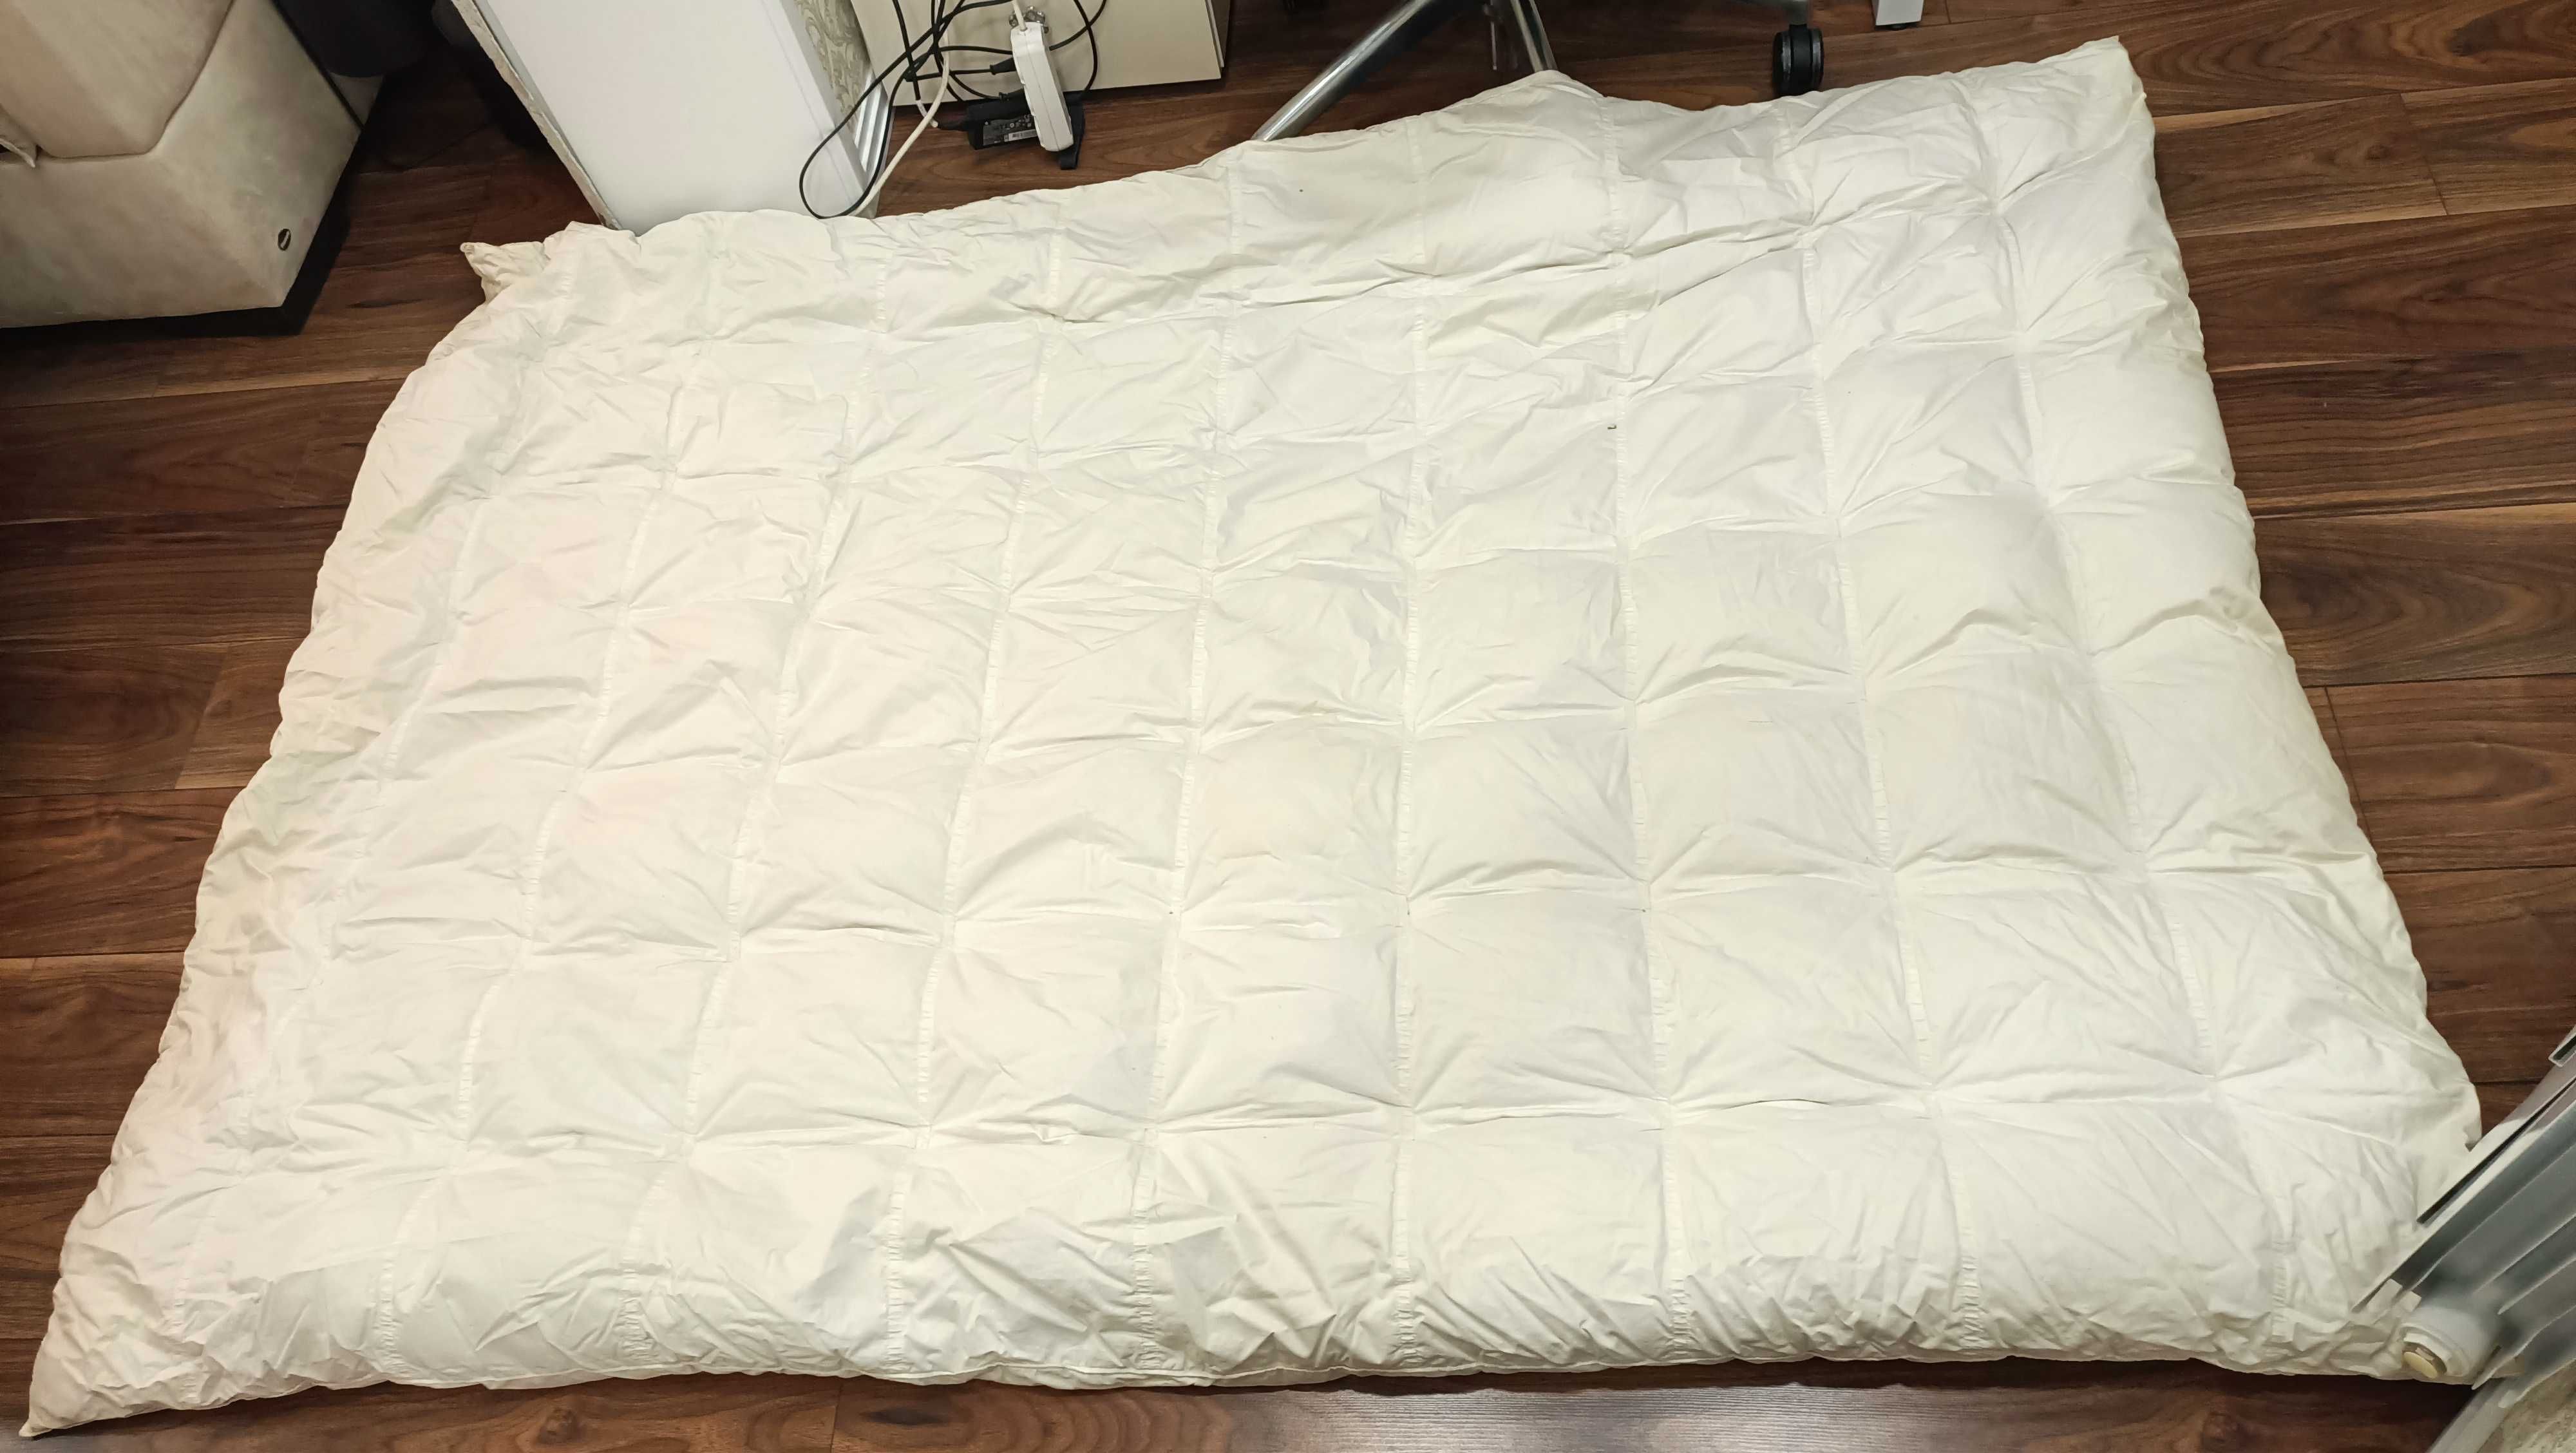 Пуховое одеяло размер 150 Х 200 см. Производитель IKEA.